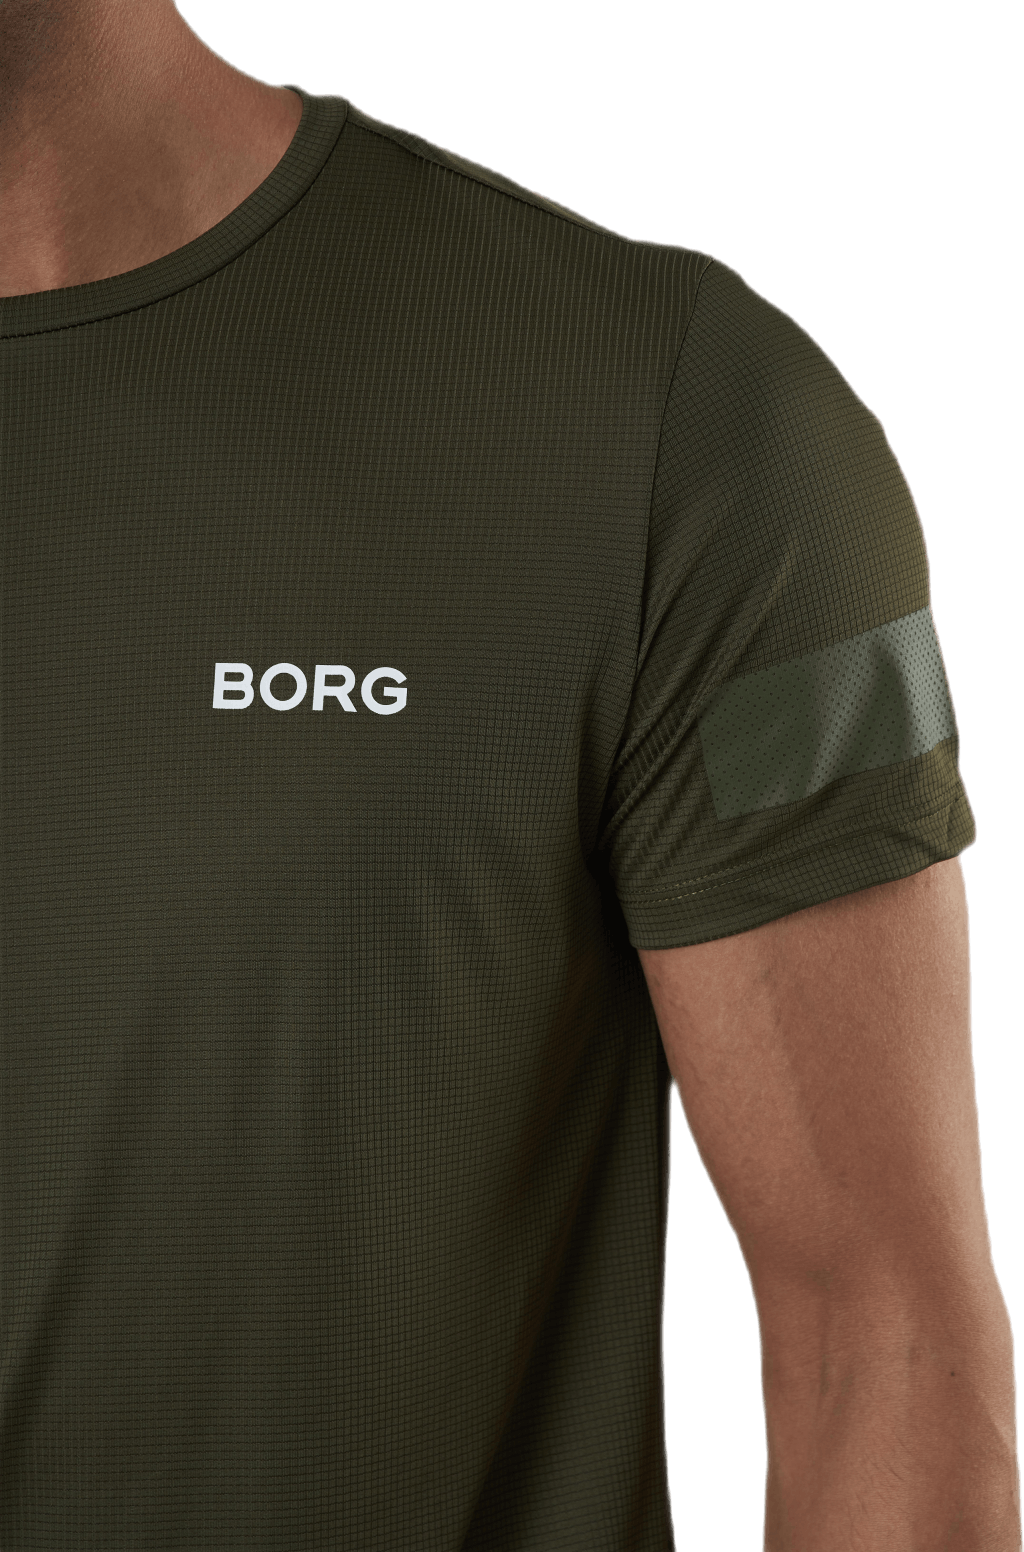 Borg Training Tee Green